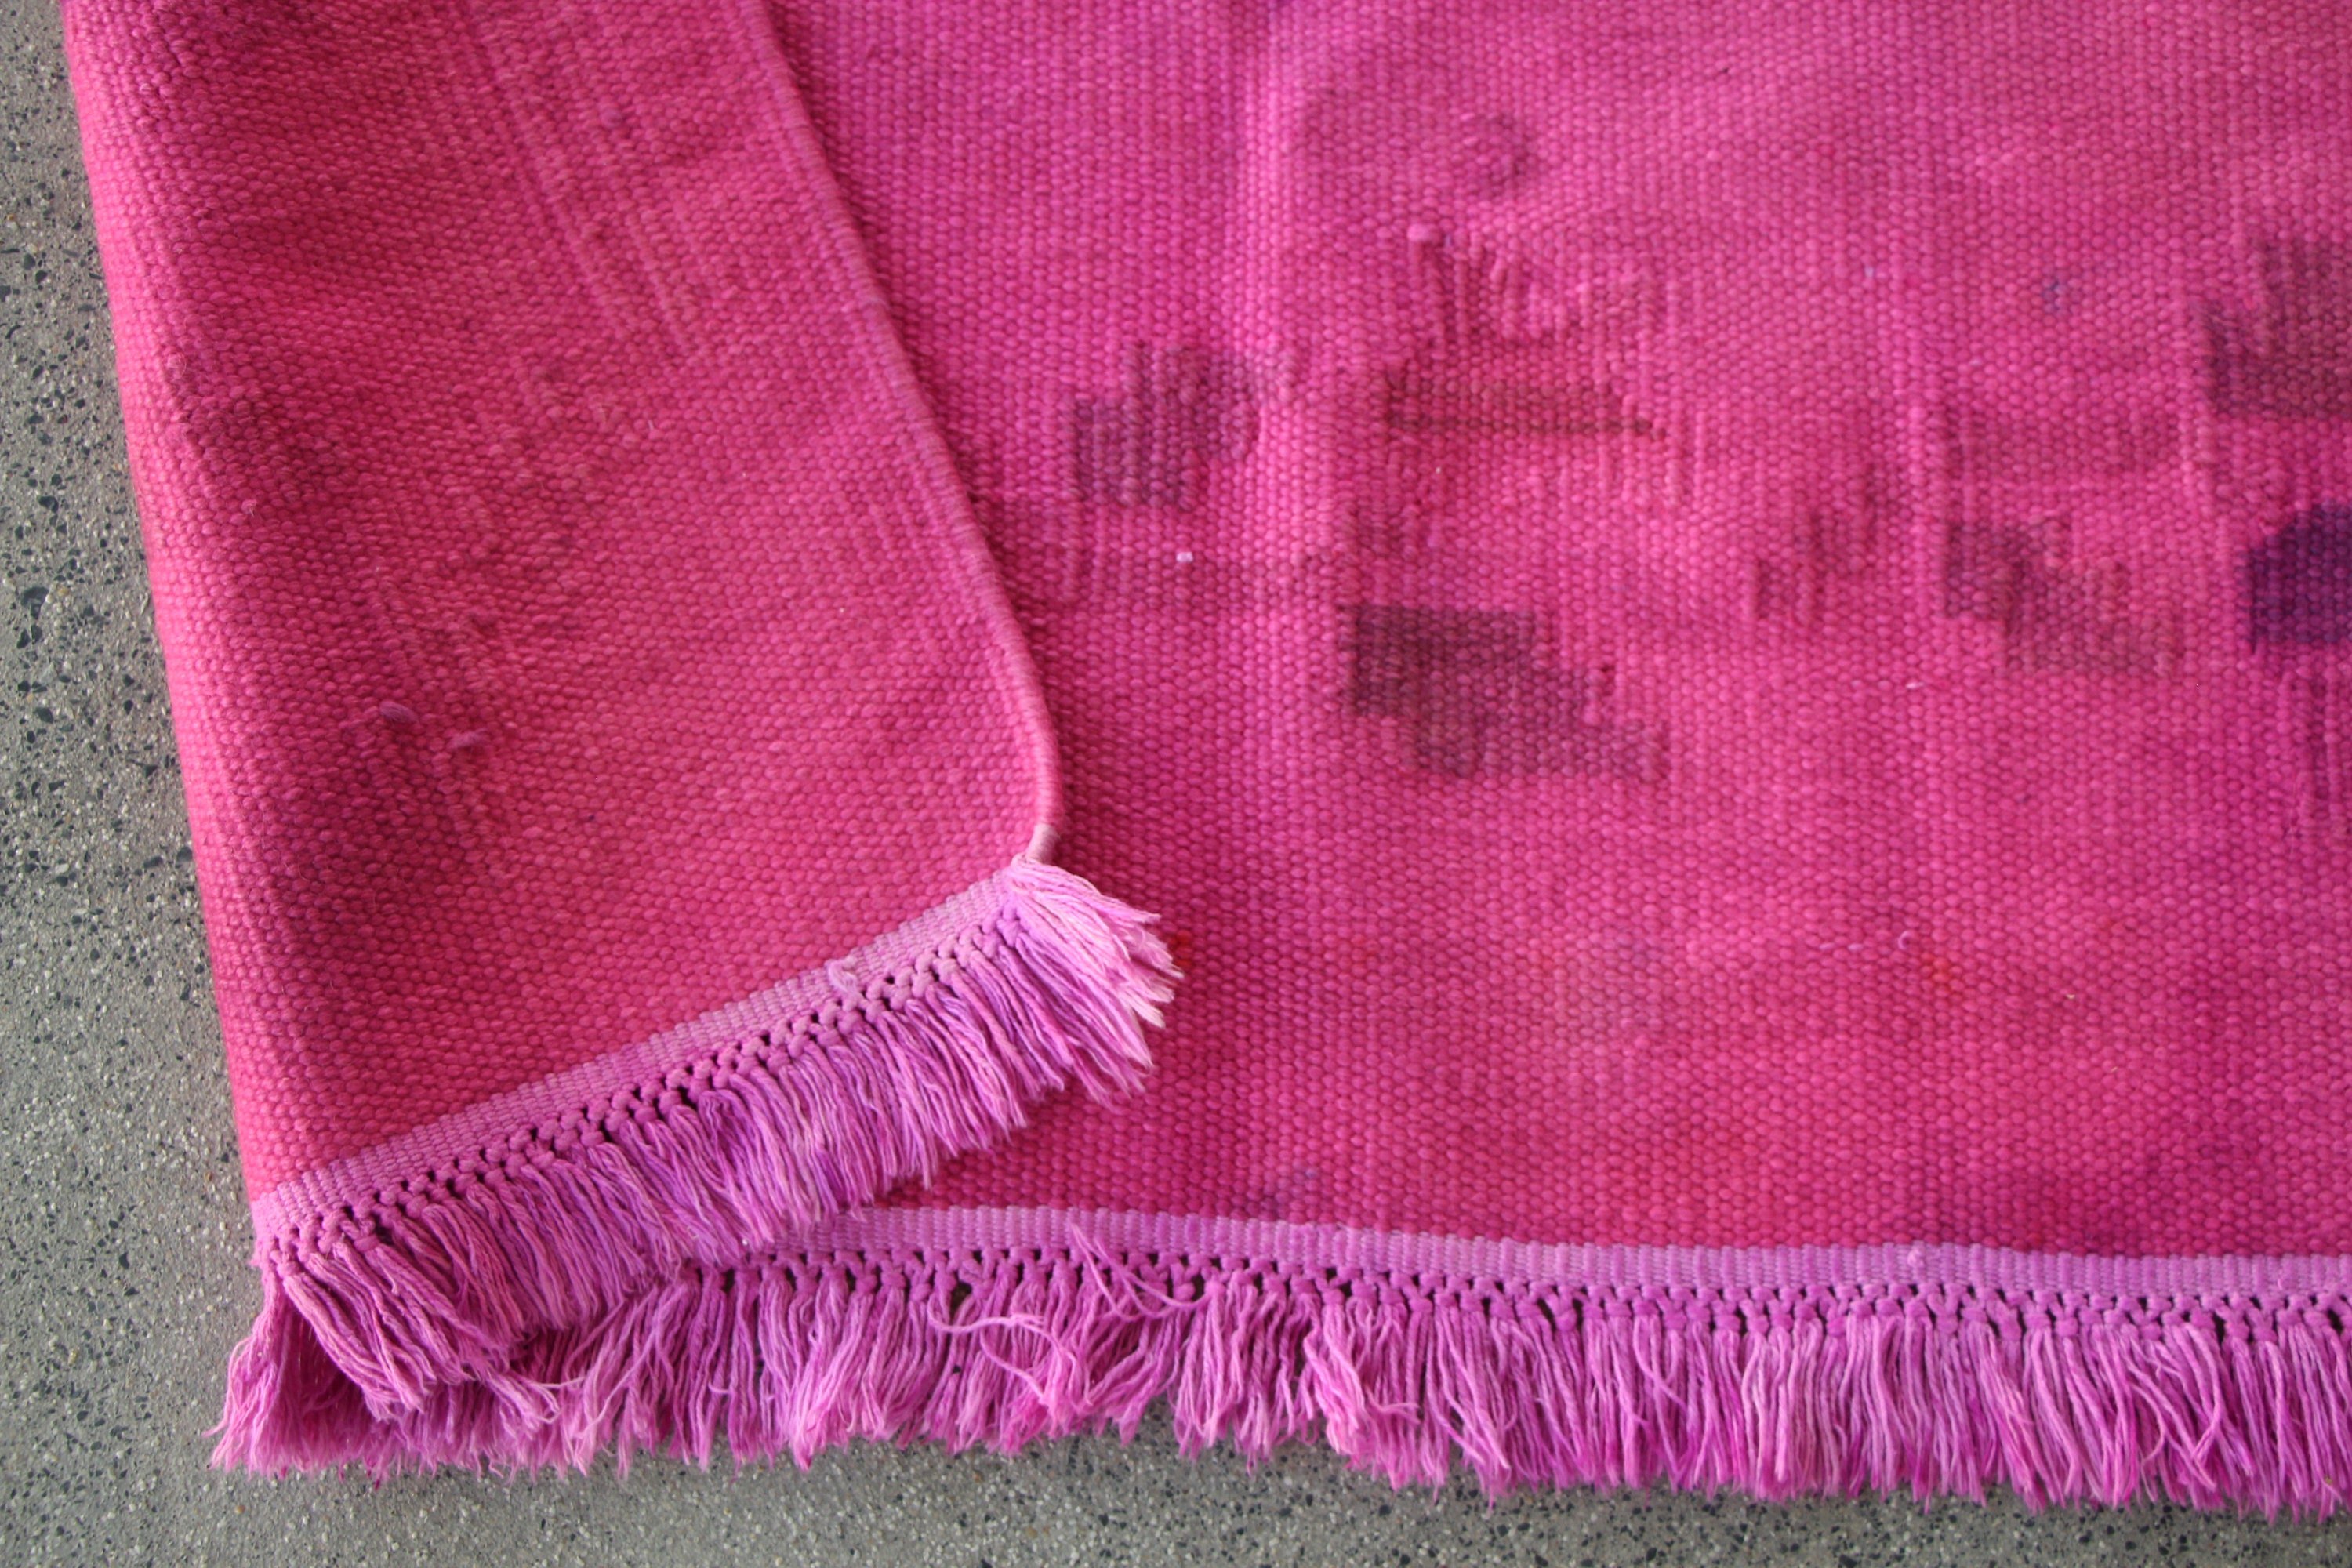 Rugs for Entry, Oushak Rugs, Pink Kitchen Rug, Kilim, Old Rug, Vintage Rug, Moroccan Rug, Nursery Rug, 3.8x5.7 ft Accent Rugs, Turkish Rug